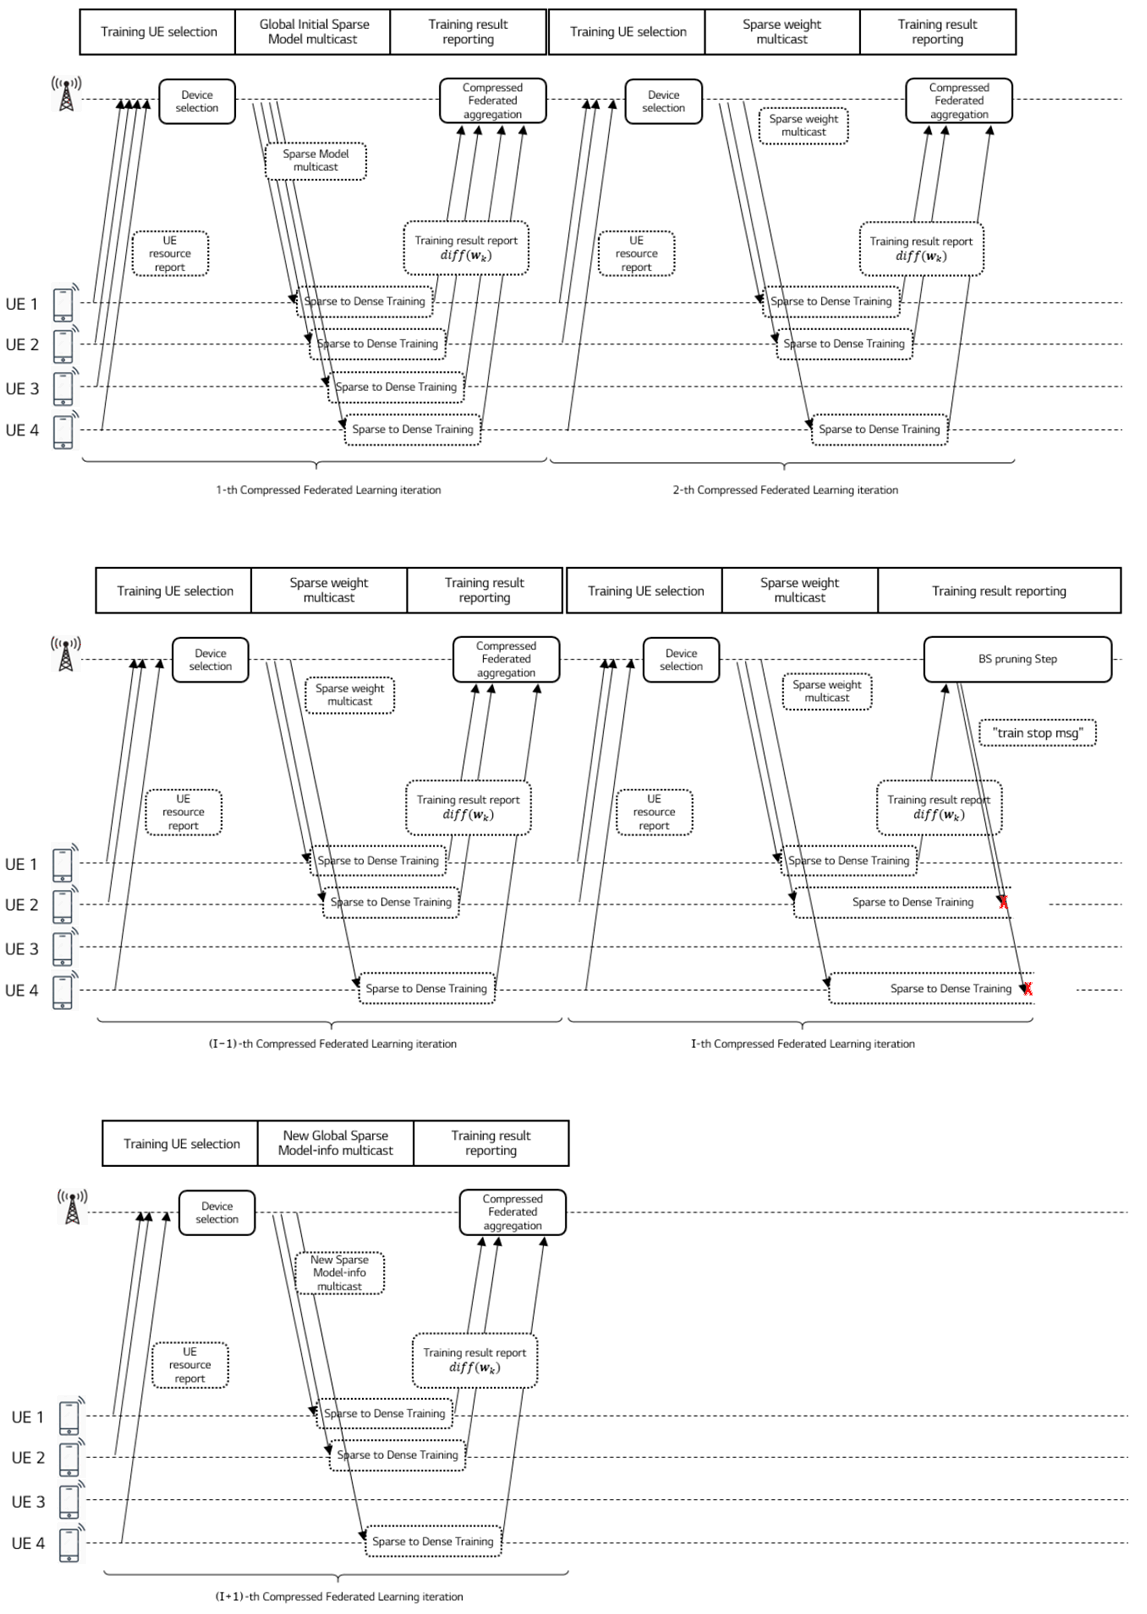 Copy of original 3GPP image for 3GPP TS 22.874, Fig. 7.2.1-1: Compressed Federated Learning timeline for image recognition